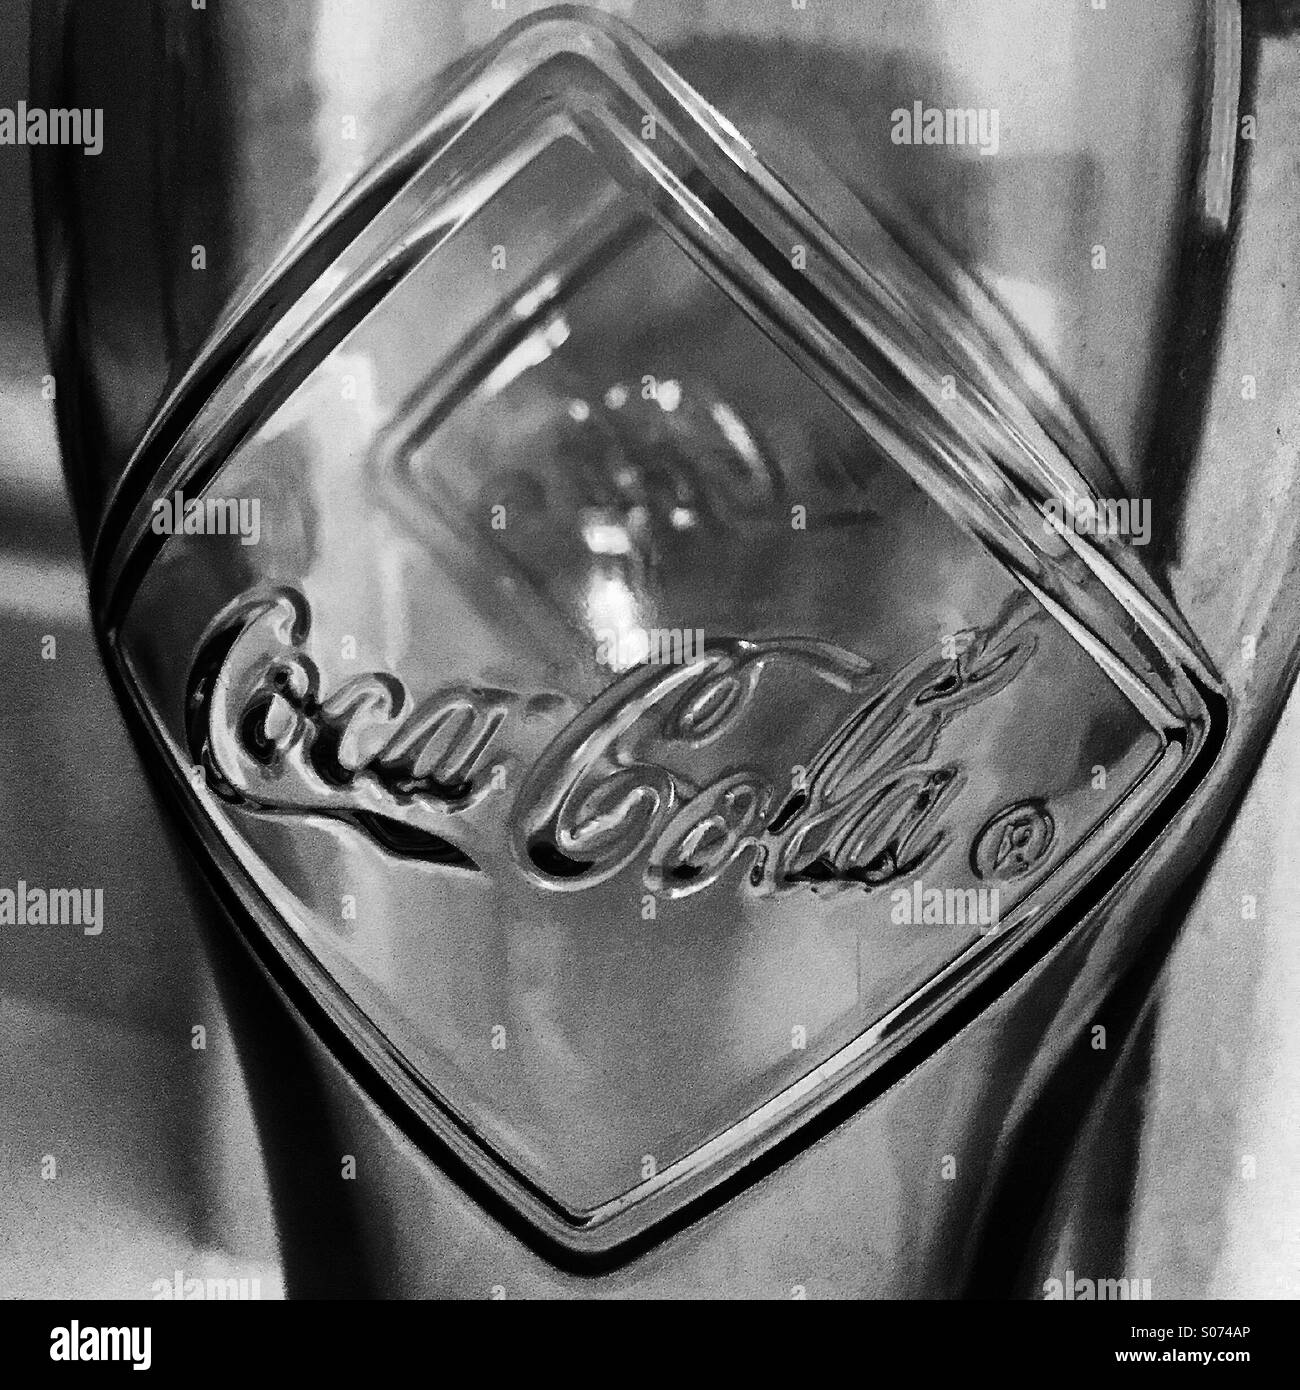 Coca cola Stock Photo